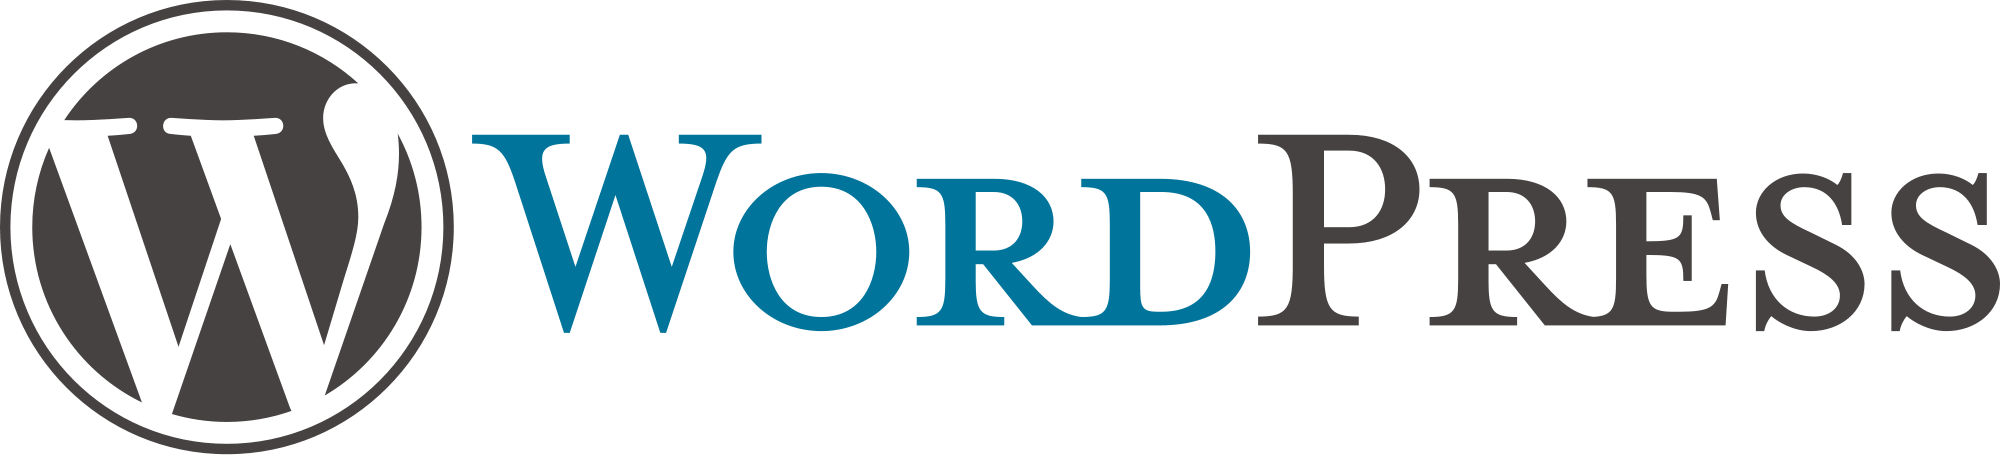 wordpress logo - seo agency rockford il